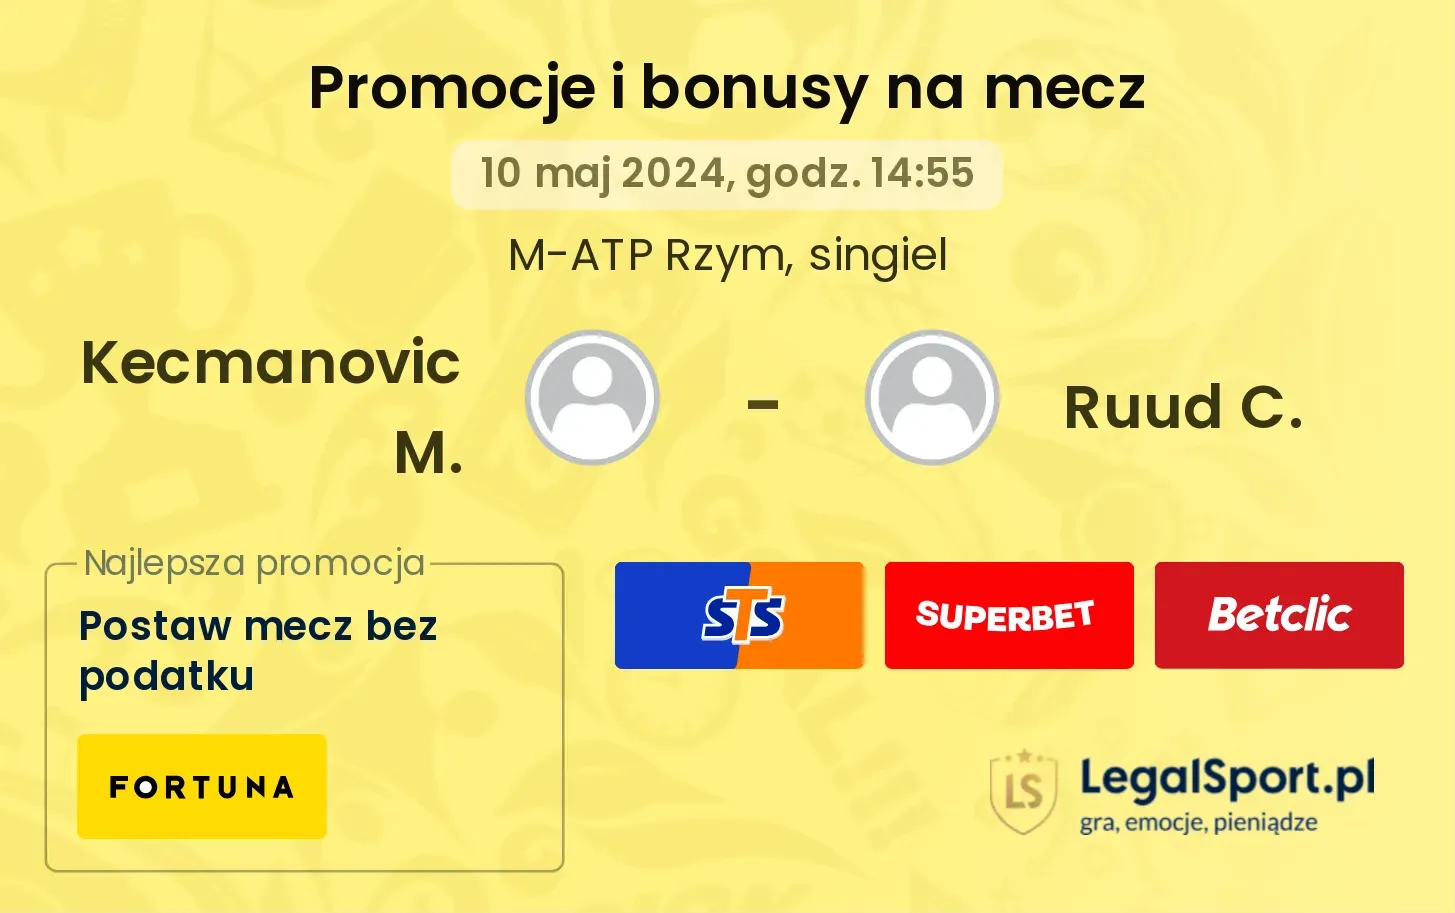 Kecmanovic M. - Ruud C. promocje bonusy na mecz